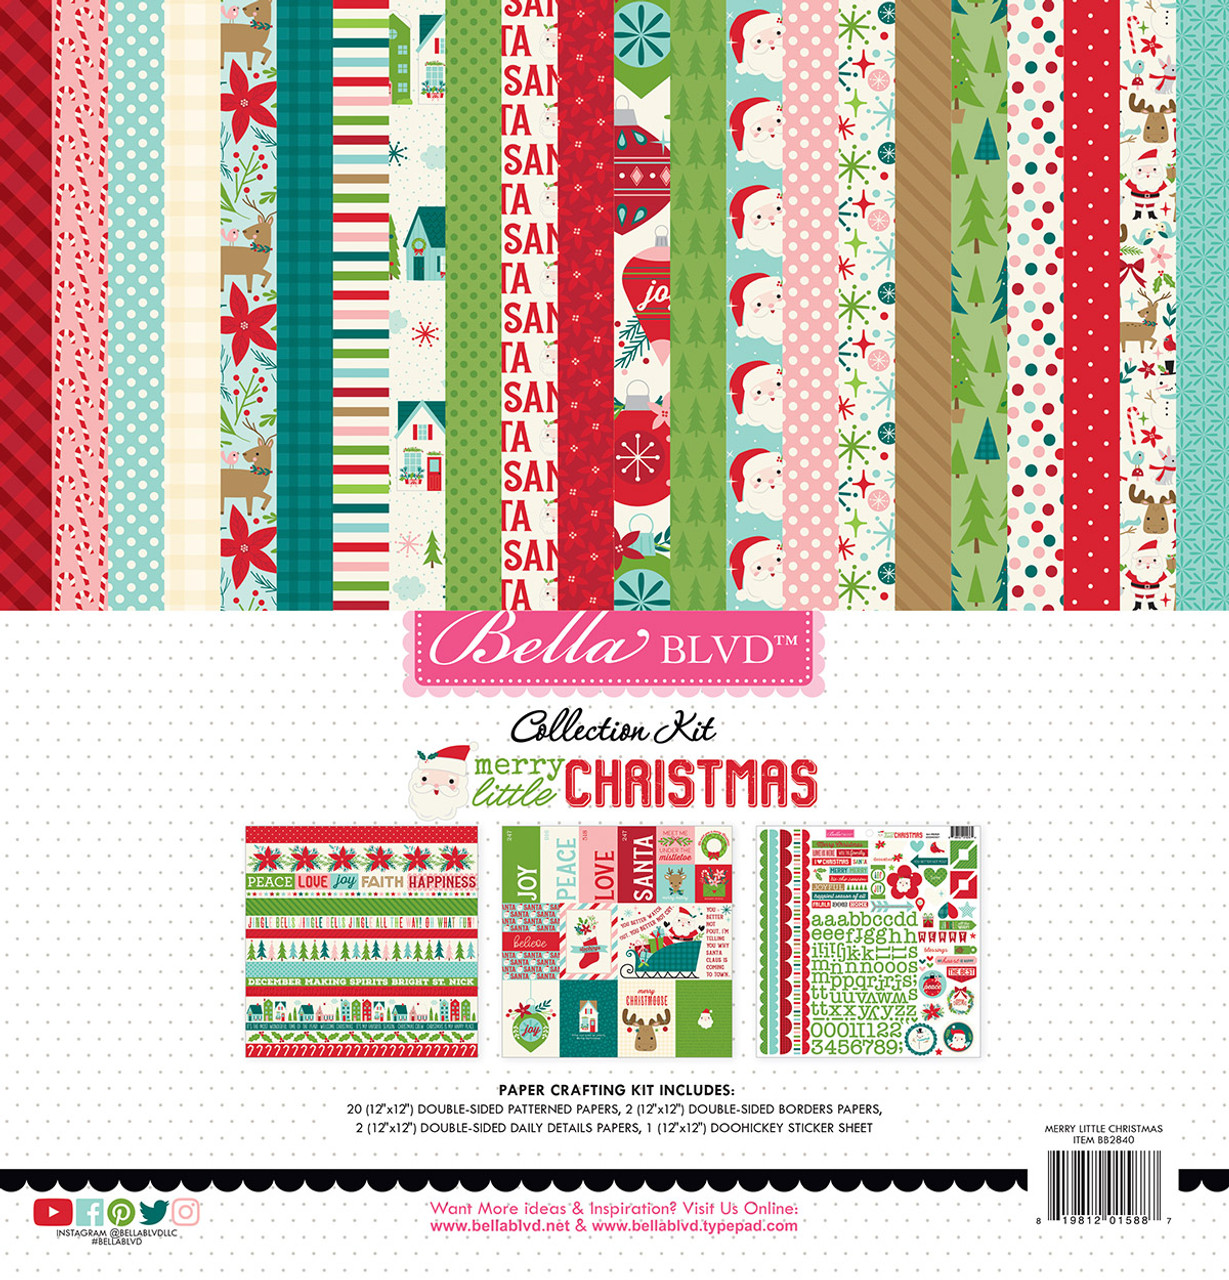 BELLA BLVD Merry Little Christmas Collection Kit - Scrapbook Generation